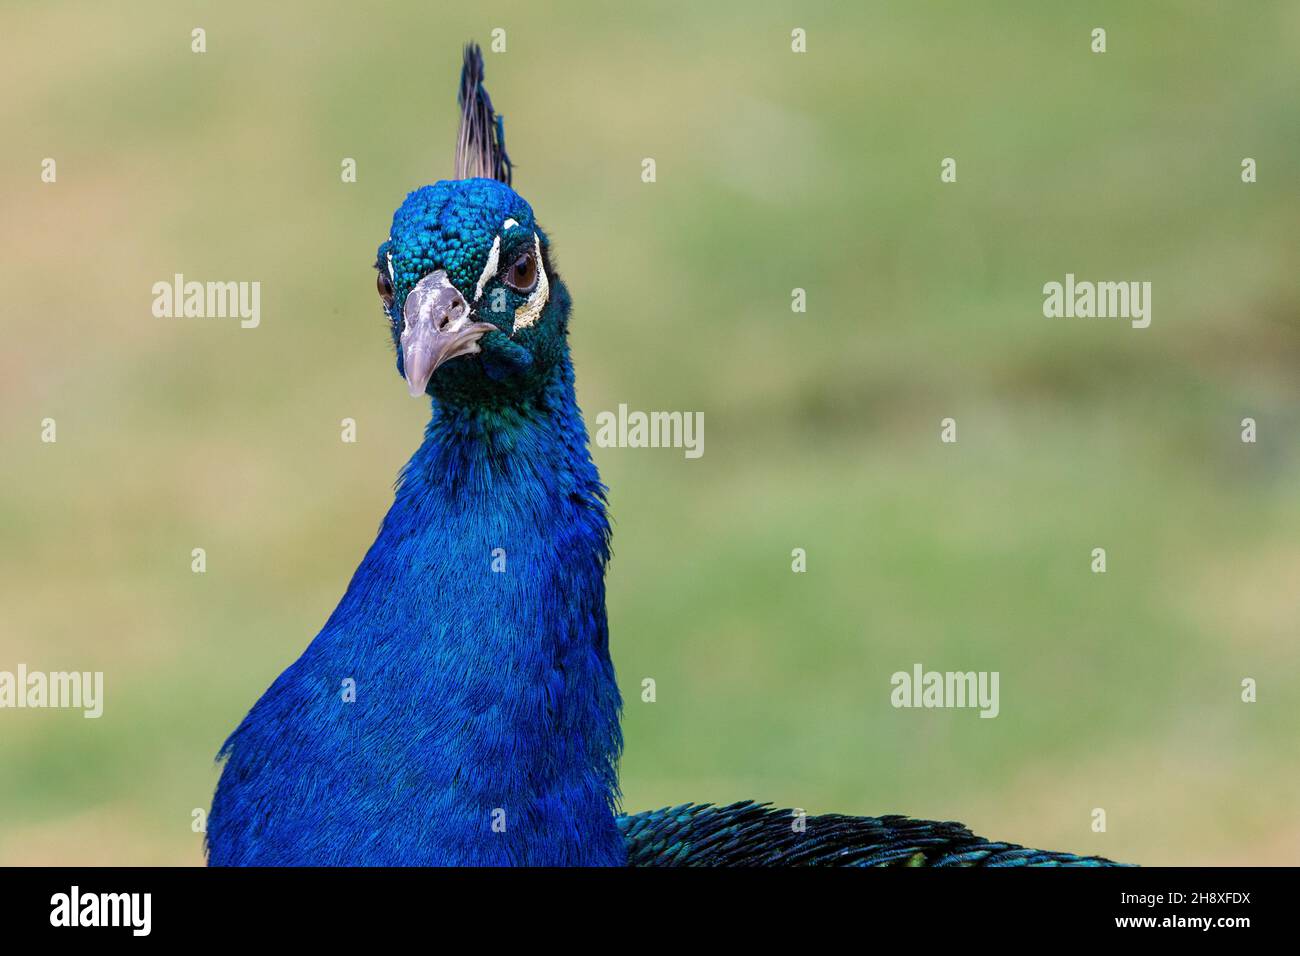 Blue Peacock Close Up Stock Photo